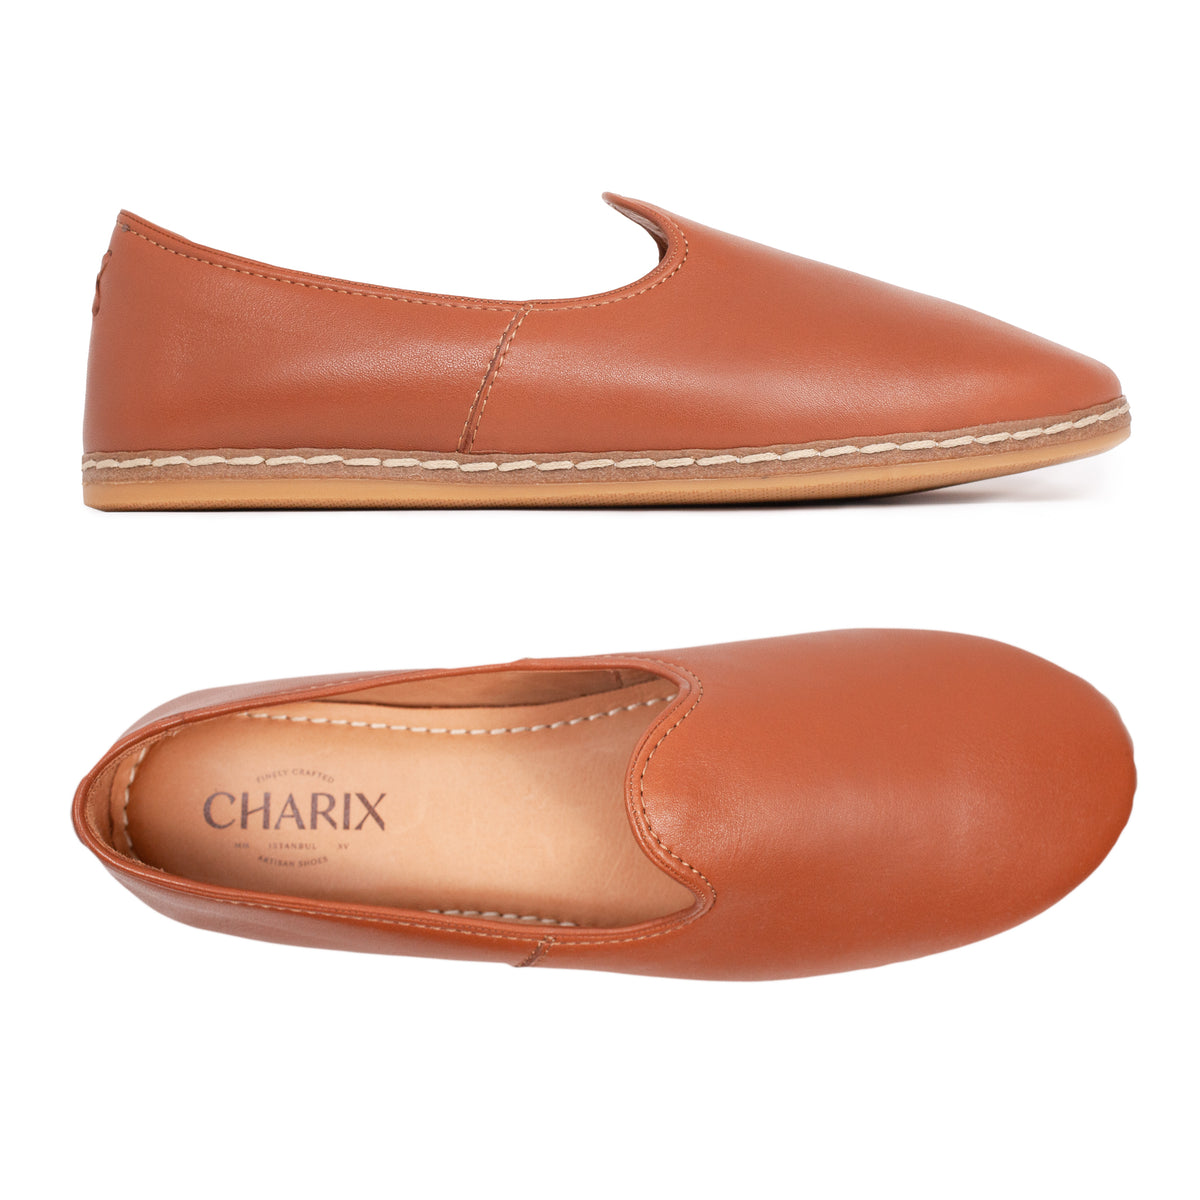 Camel - Men's - Charix Shoes